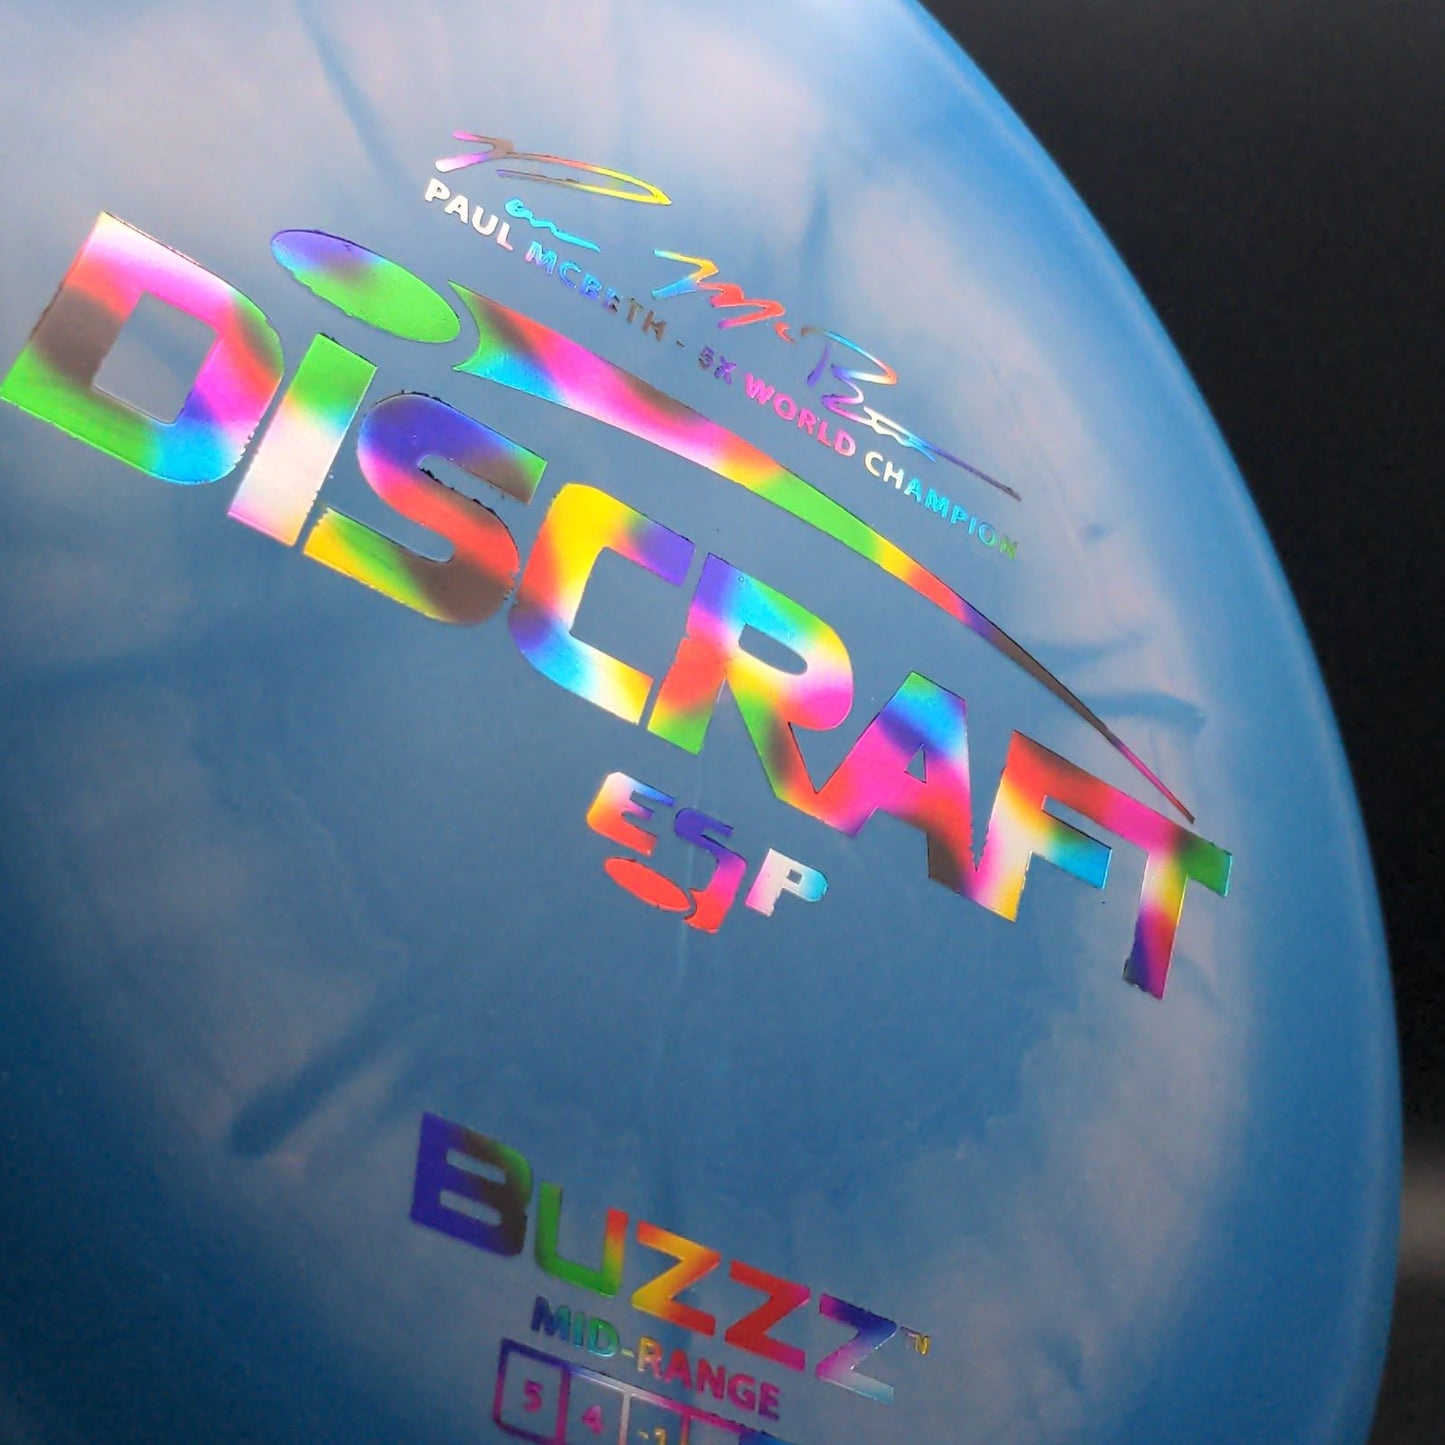 Swirl ESP Buzzz - Paul McBeth 5x World Champion Discraft